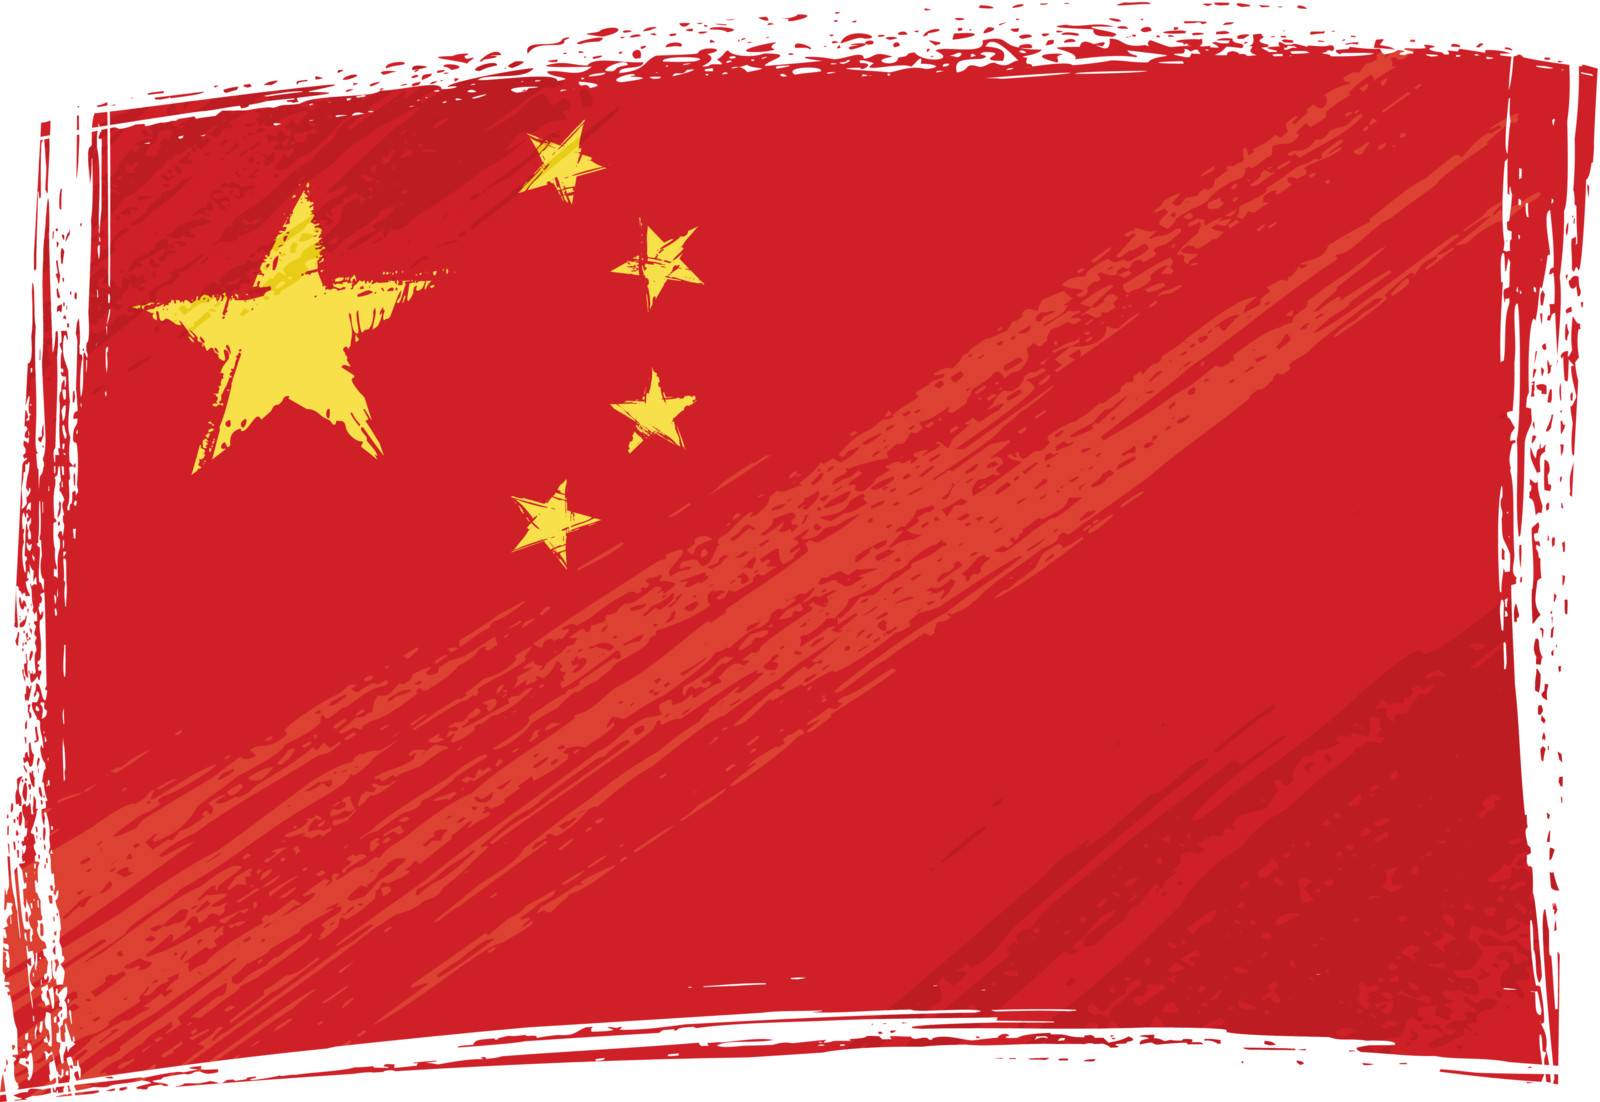 Grunge China flag by oxygen64